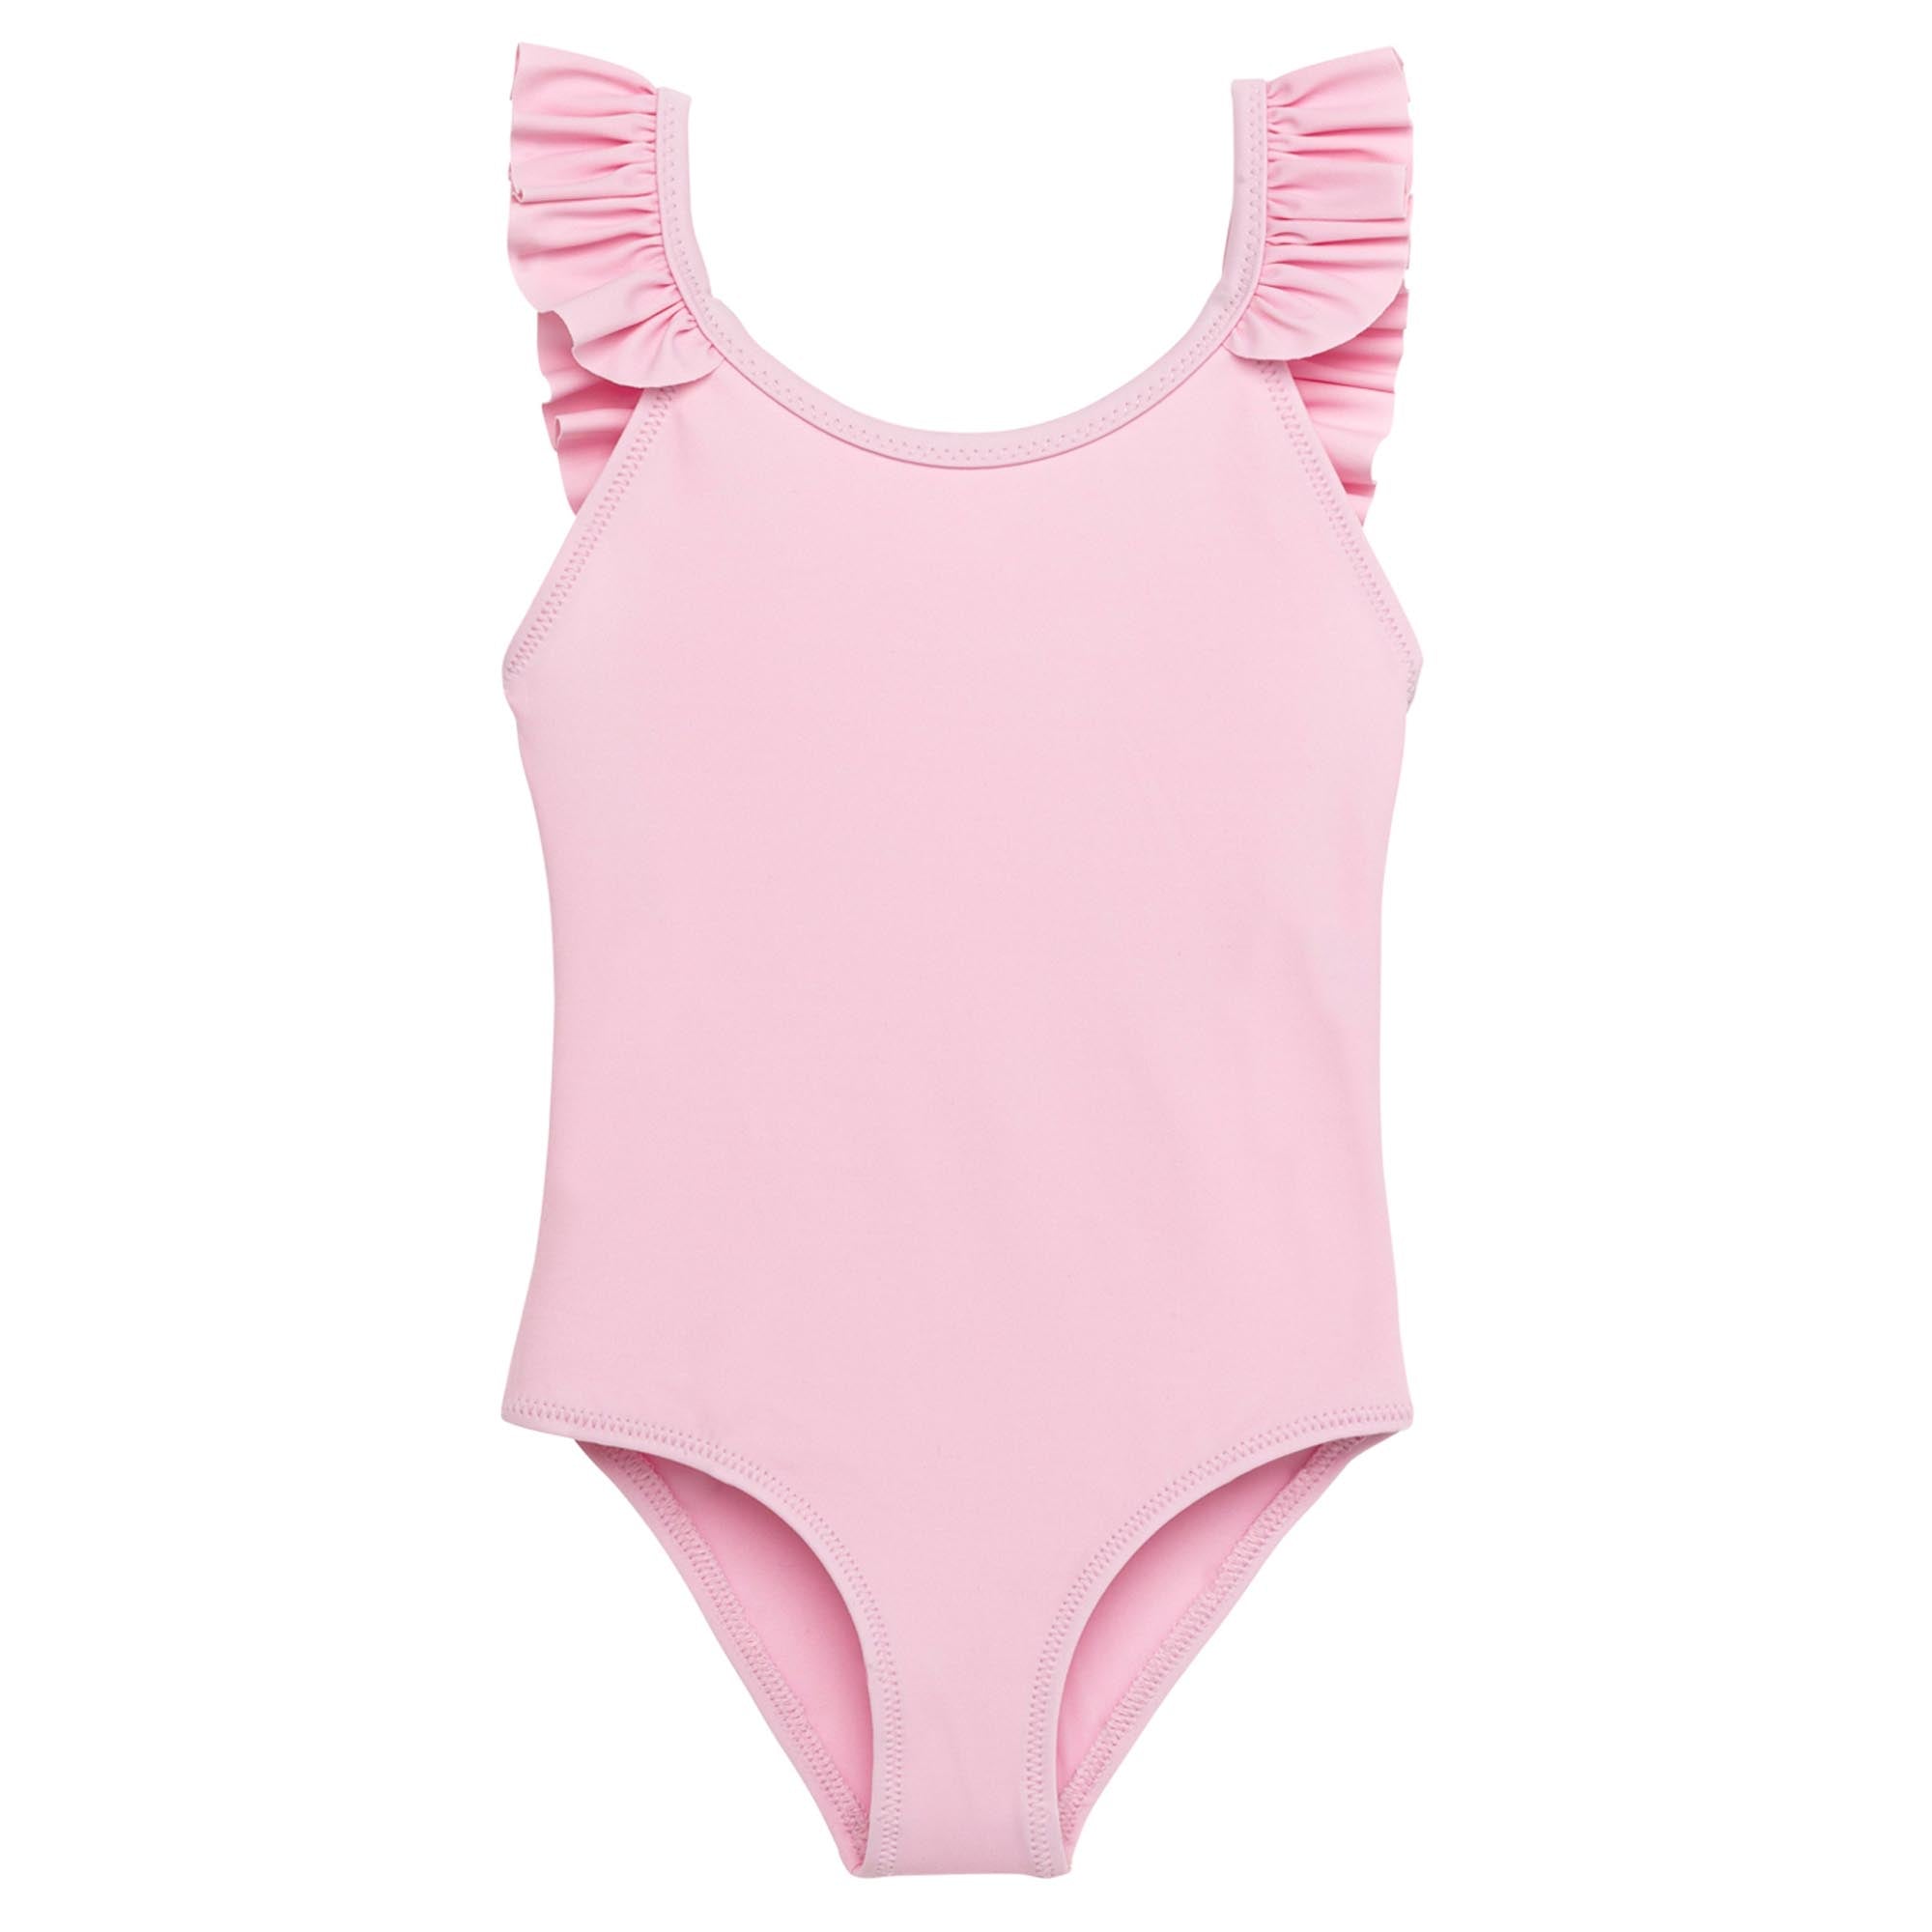 One piece girl's swimsuit, UPF50+, light pink